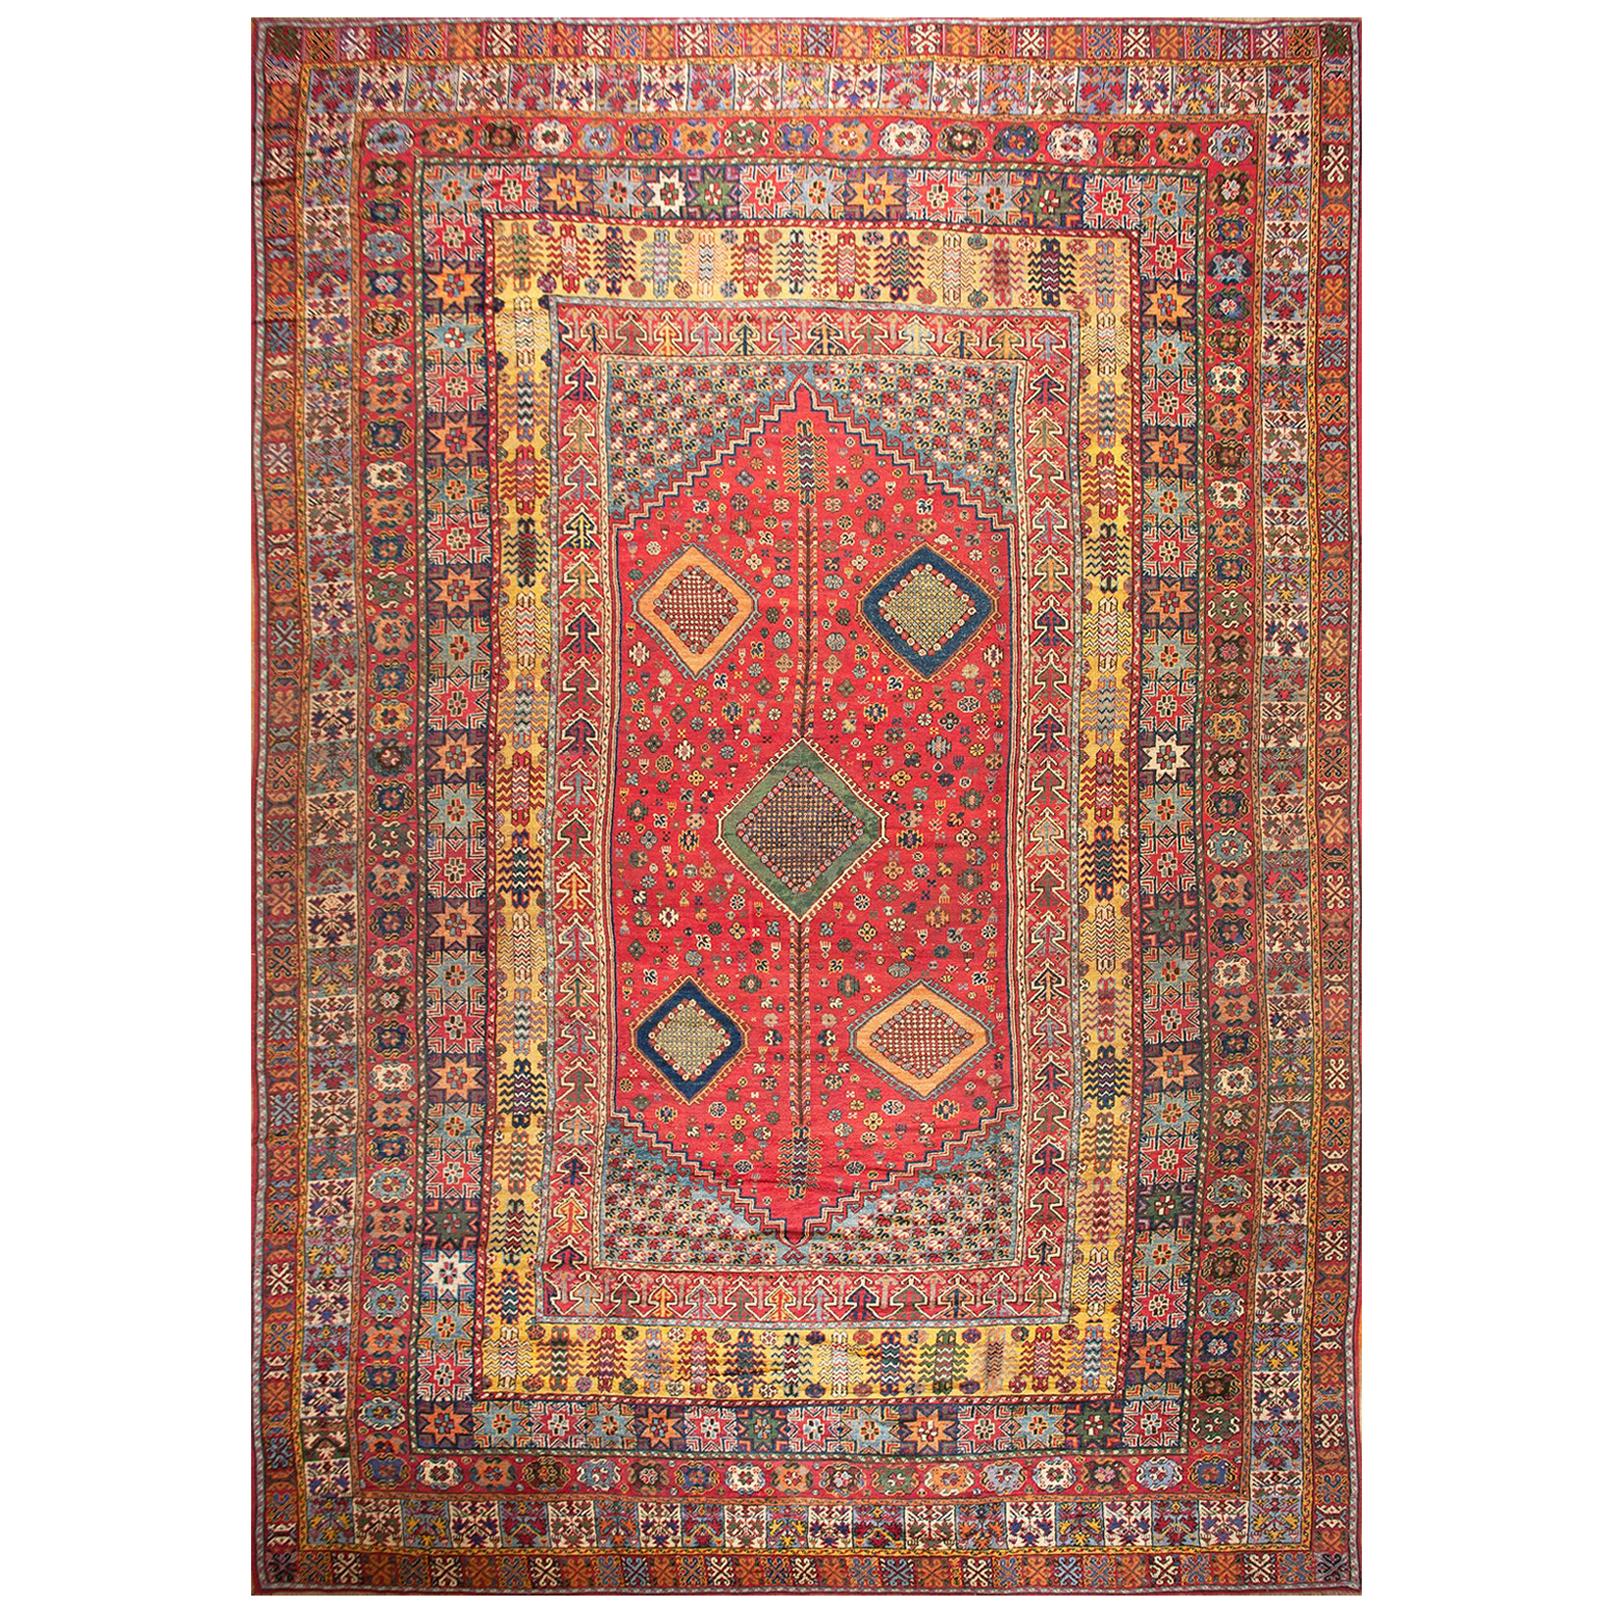 Late 19th Century Moroccan Rabat Carpet ( 14'10" x 20'8" - 452 x 630)  For Sale